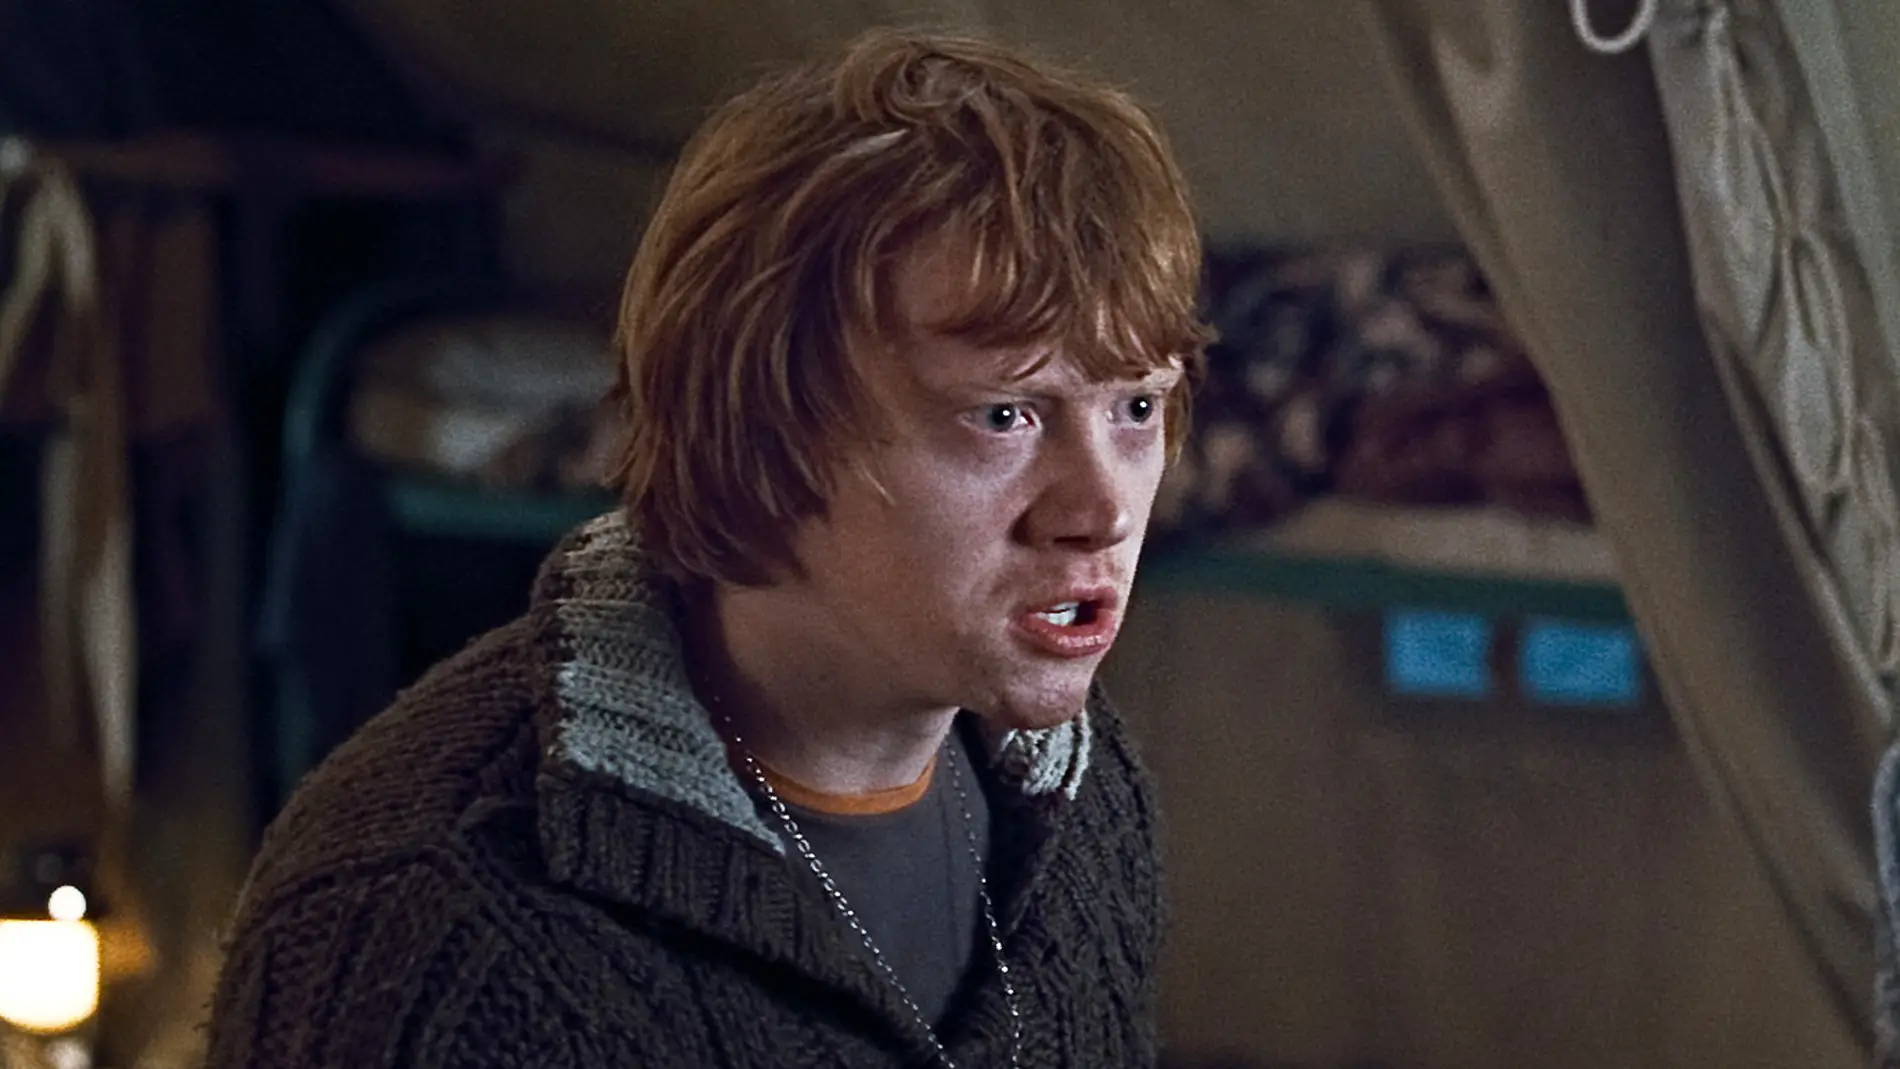 Rupert Grint en 'Harry Potter y las Reliquias de la Muerte'